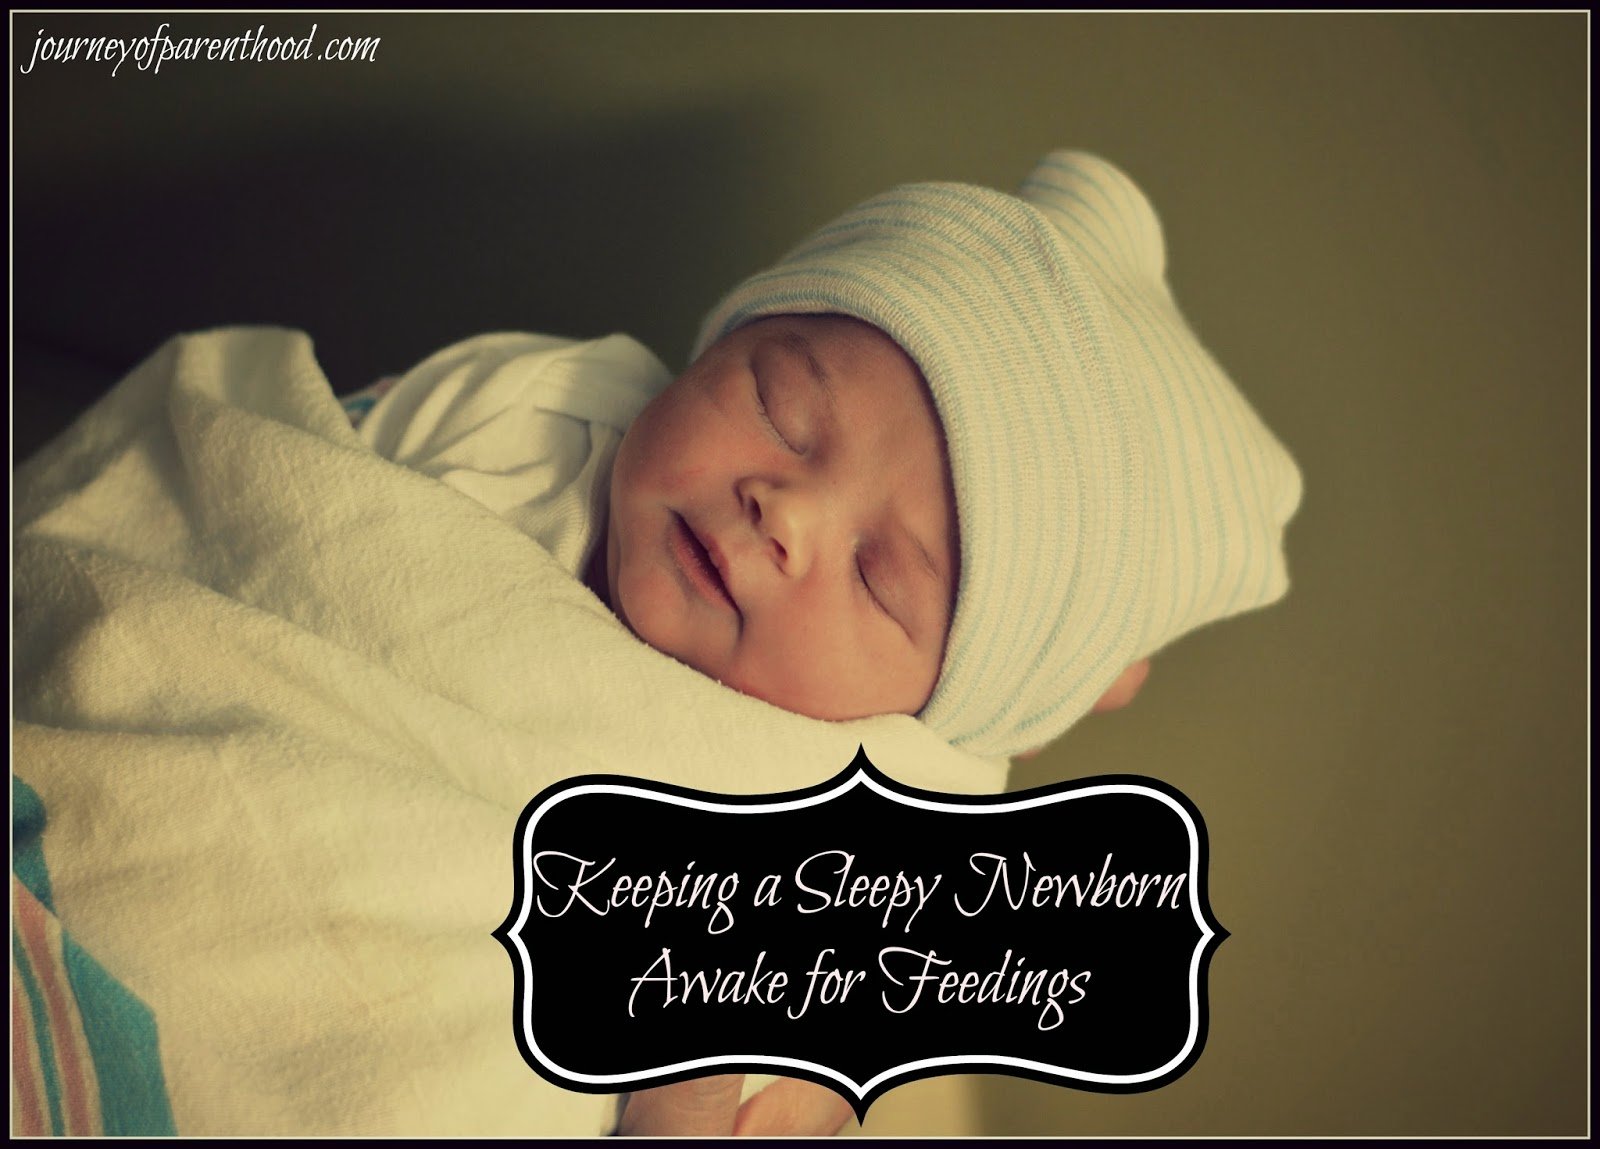 The Journey of Parenthood...: Keeping a Sleepy Newborn ...